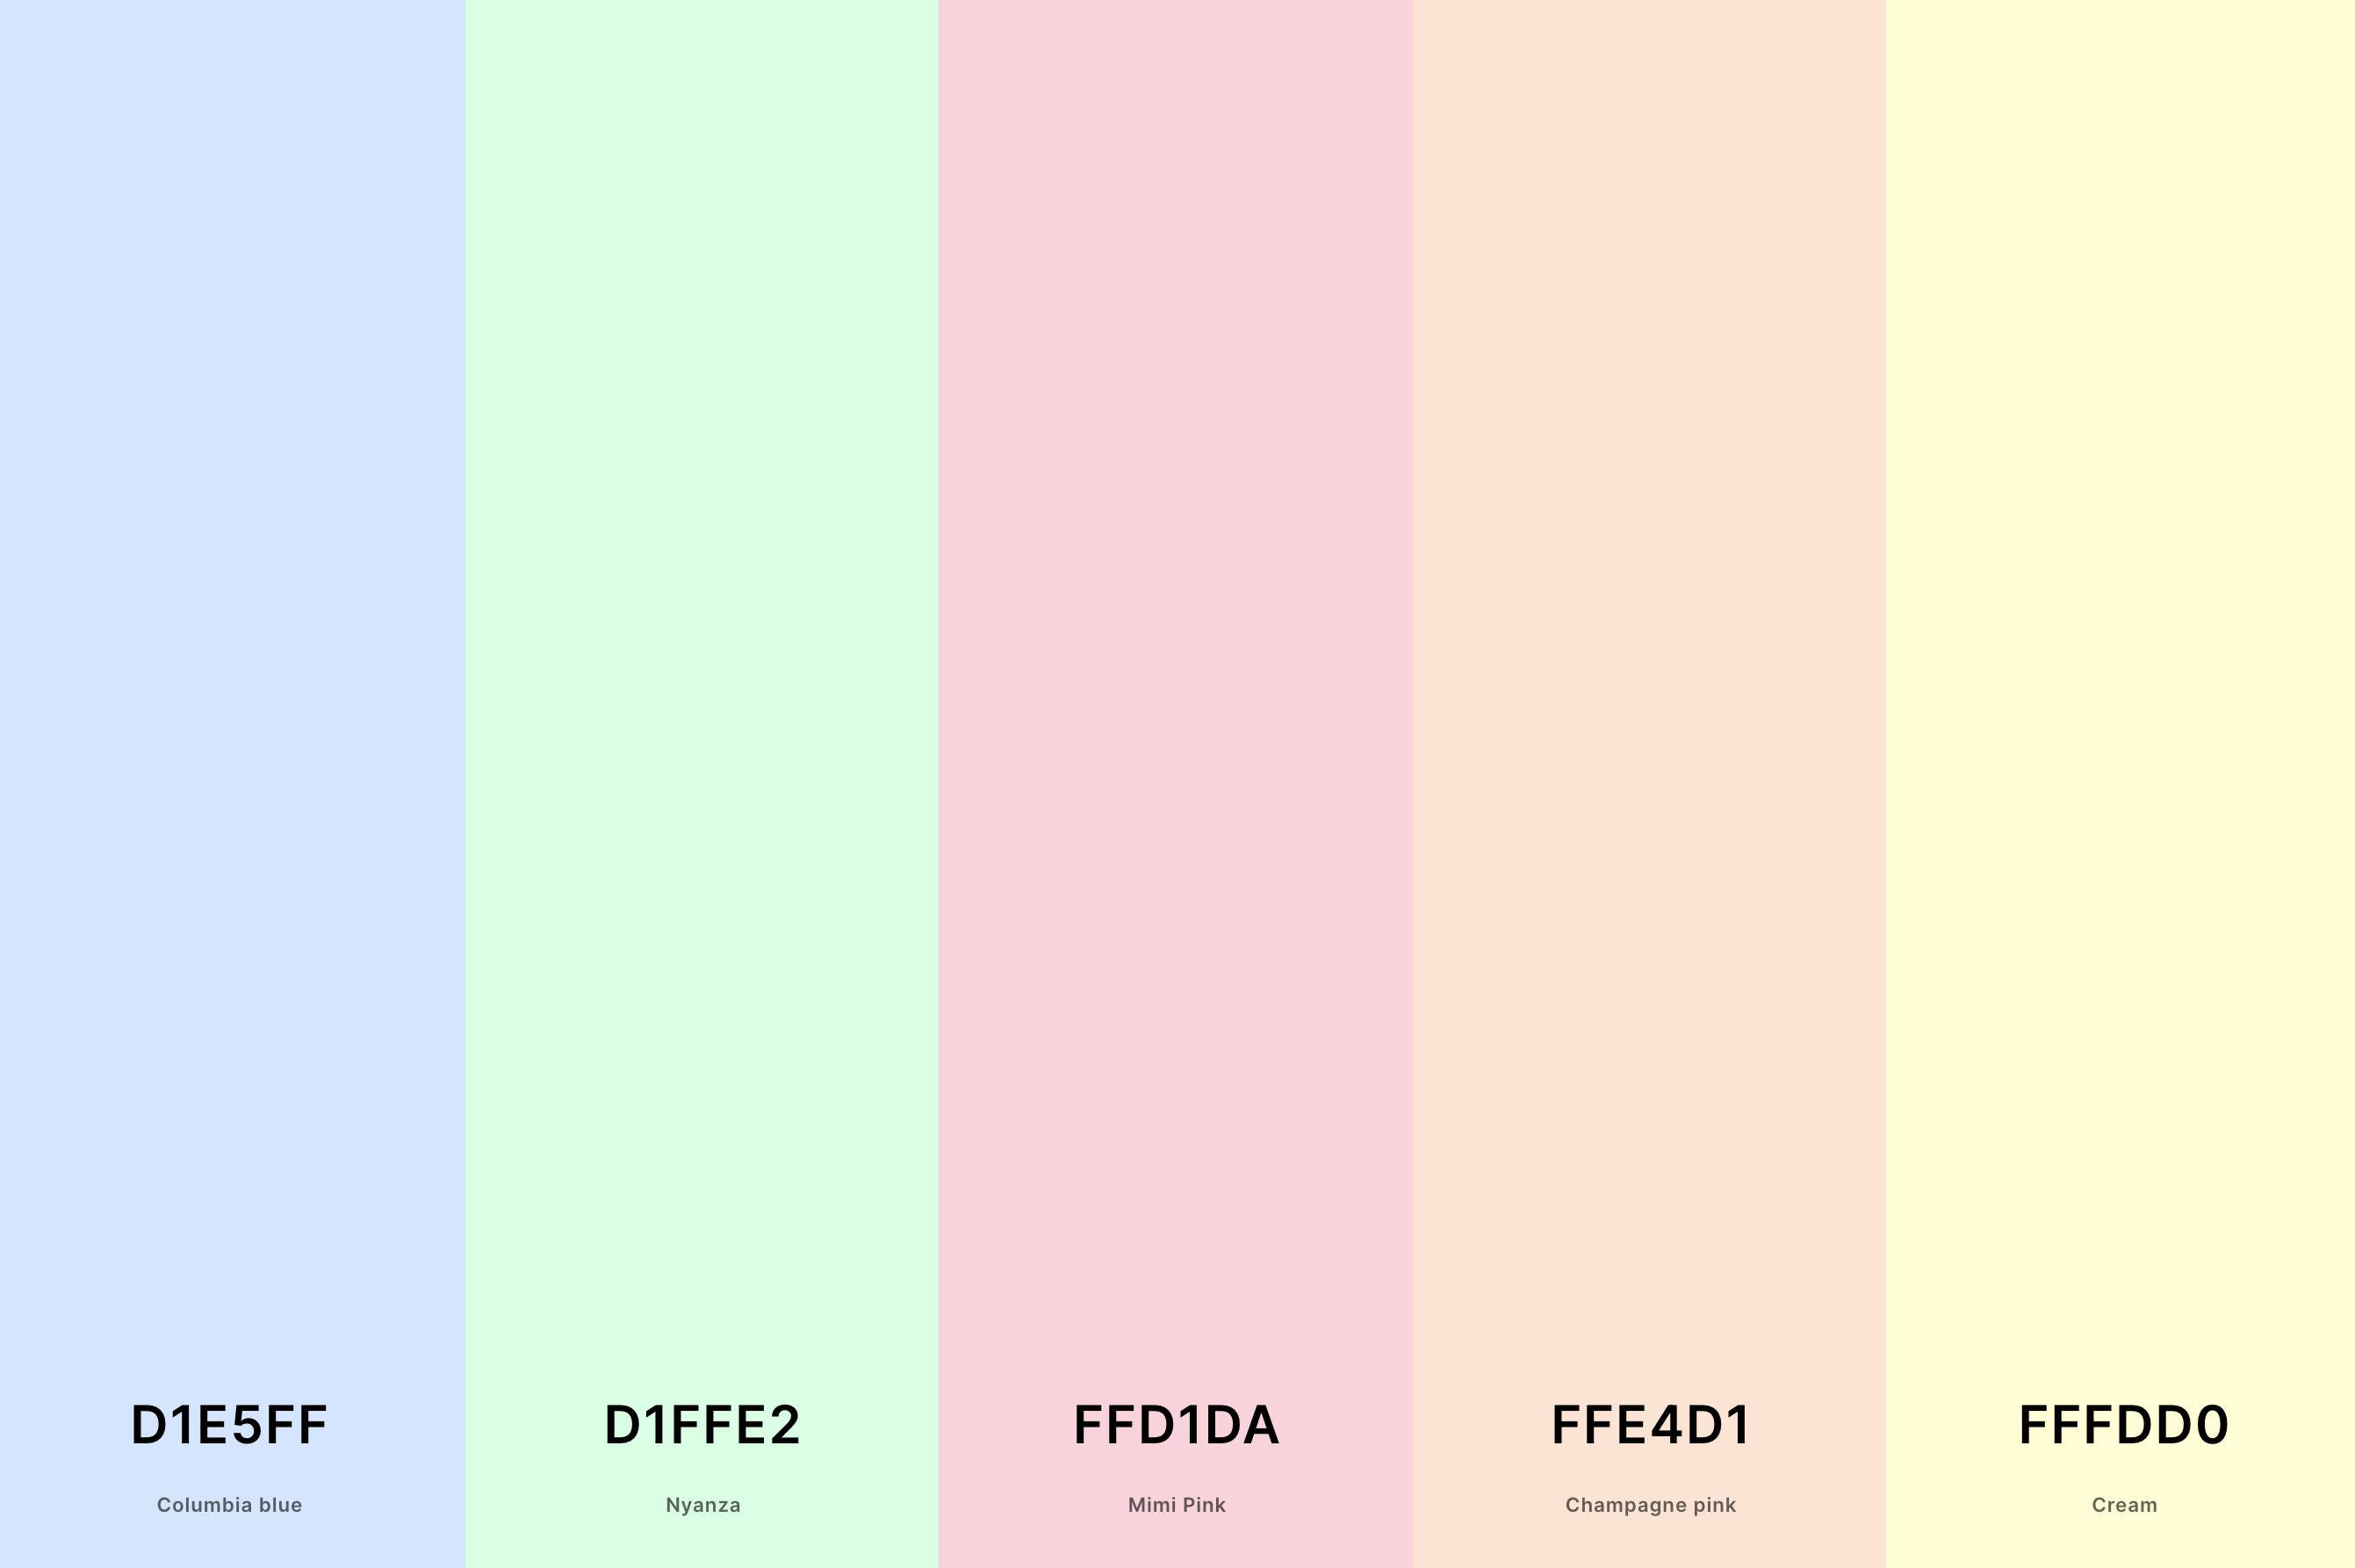 17. Pastel Cream Color Palette Color Palette with Columbia Blue (Hex #D1E5FF) + Nyanza (Hex #D1FFE2) + Mimi Pink (Hex #FFD1DA) + Champagne Pink (Hex #FFE4D1) + Cream (Hex #FFFDD0) Color Palette with Hex Codes